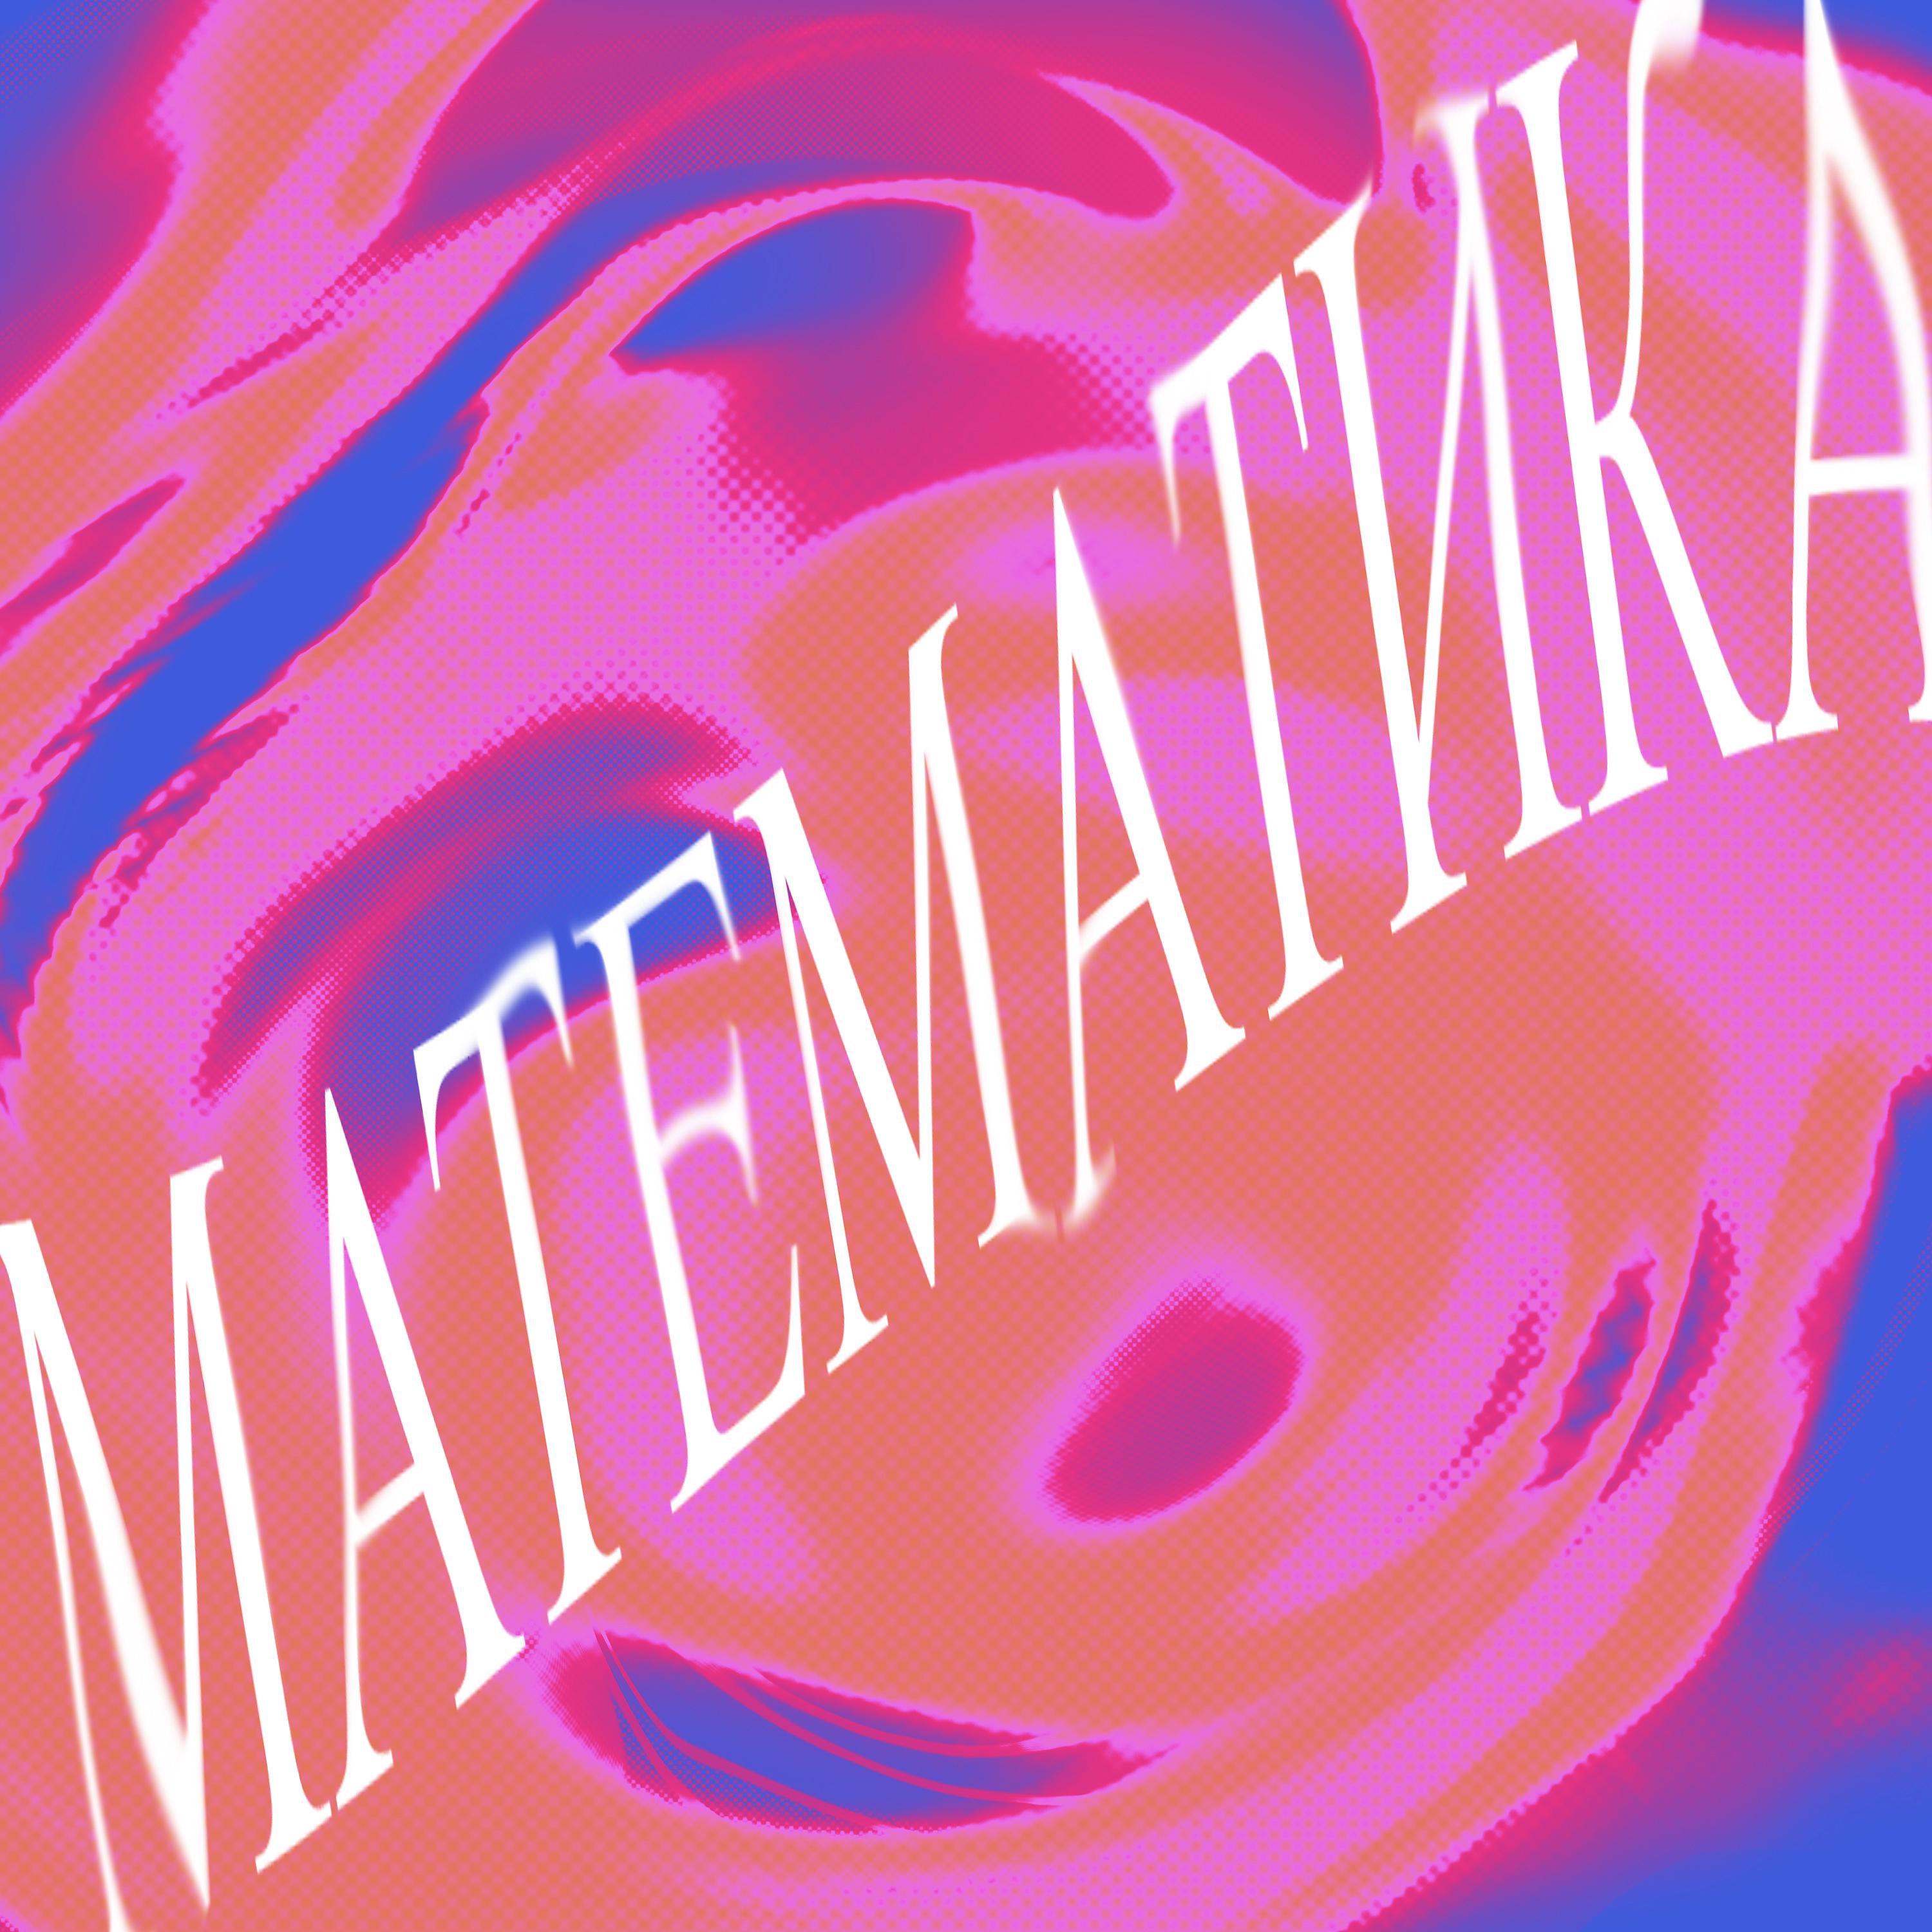 Постер альбома Математика